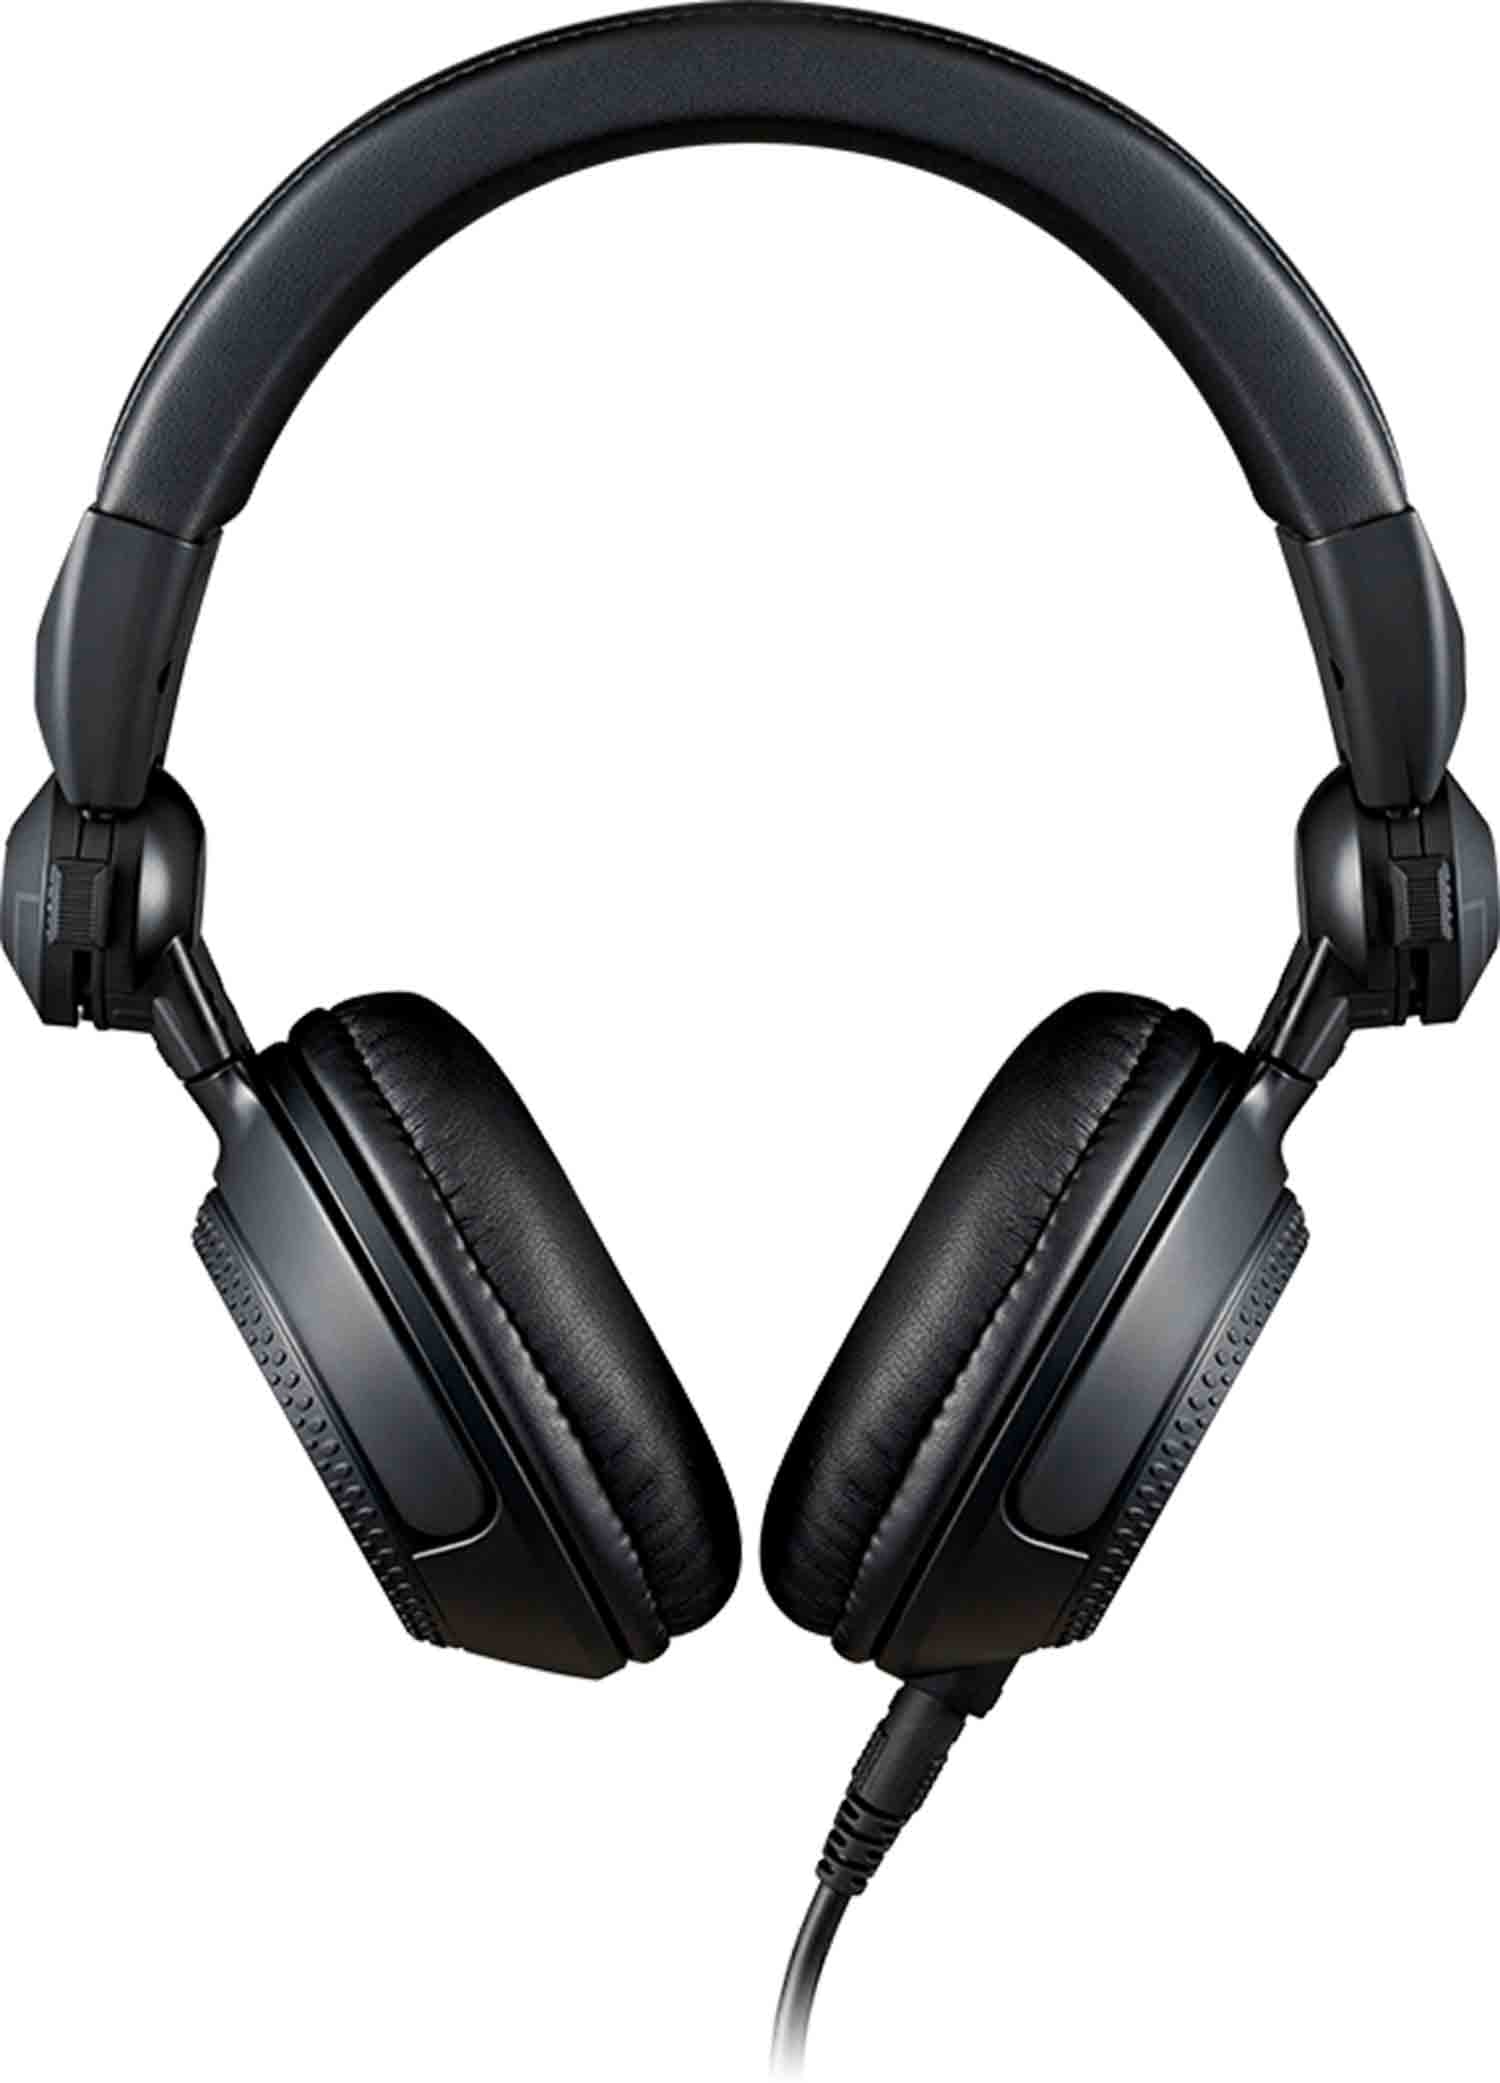 Technics EAH-DJ1200, Professional DJ Headphones - Black - Hollywood DJ